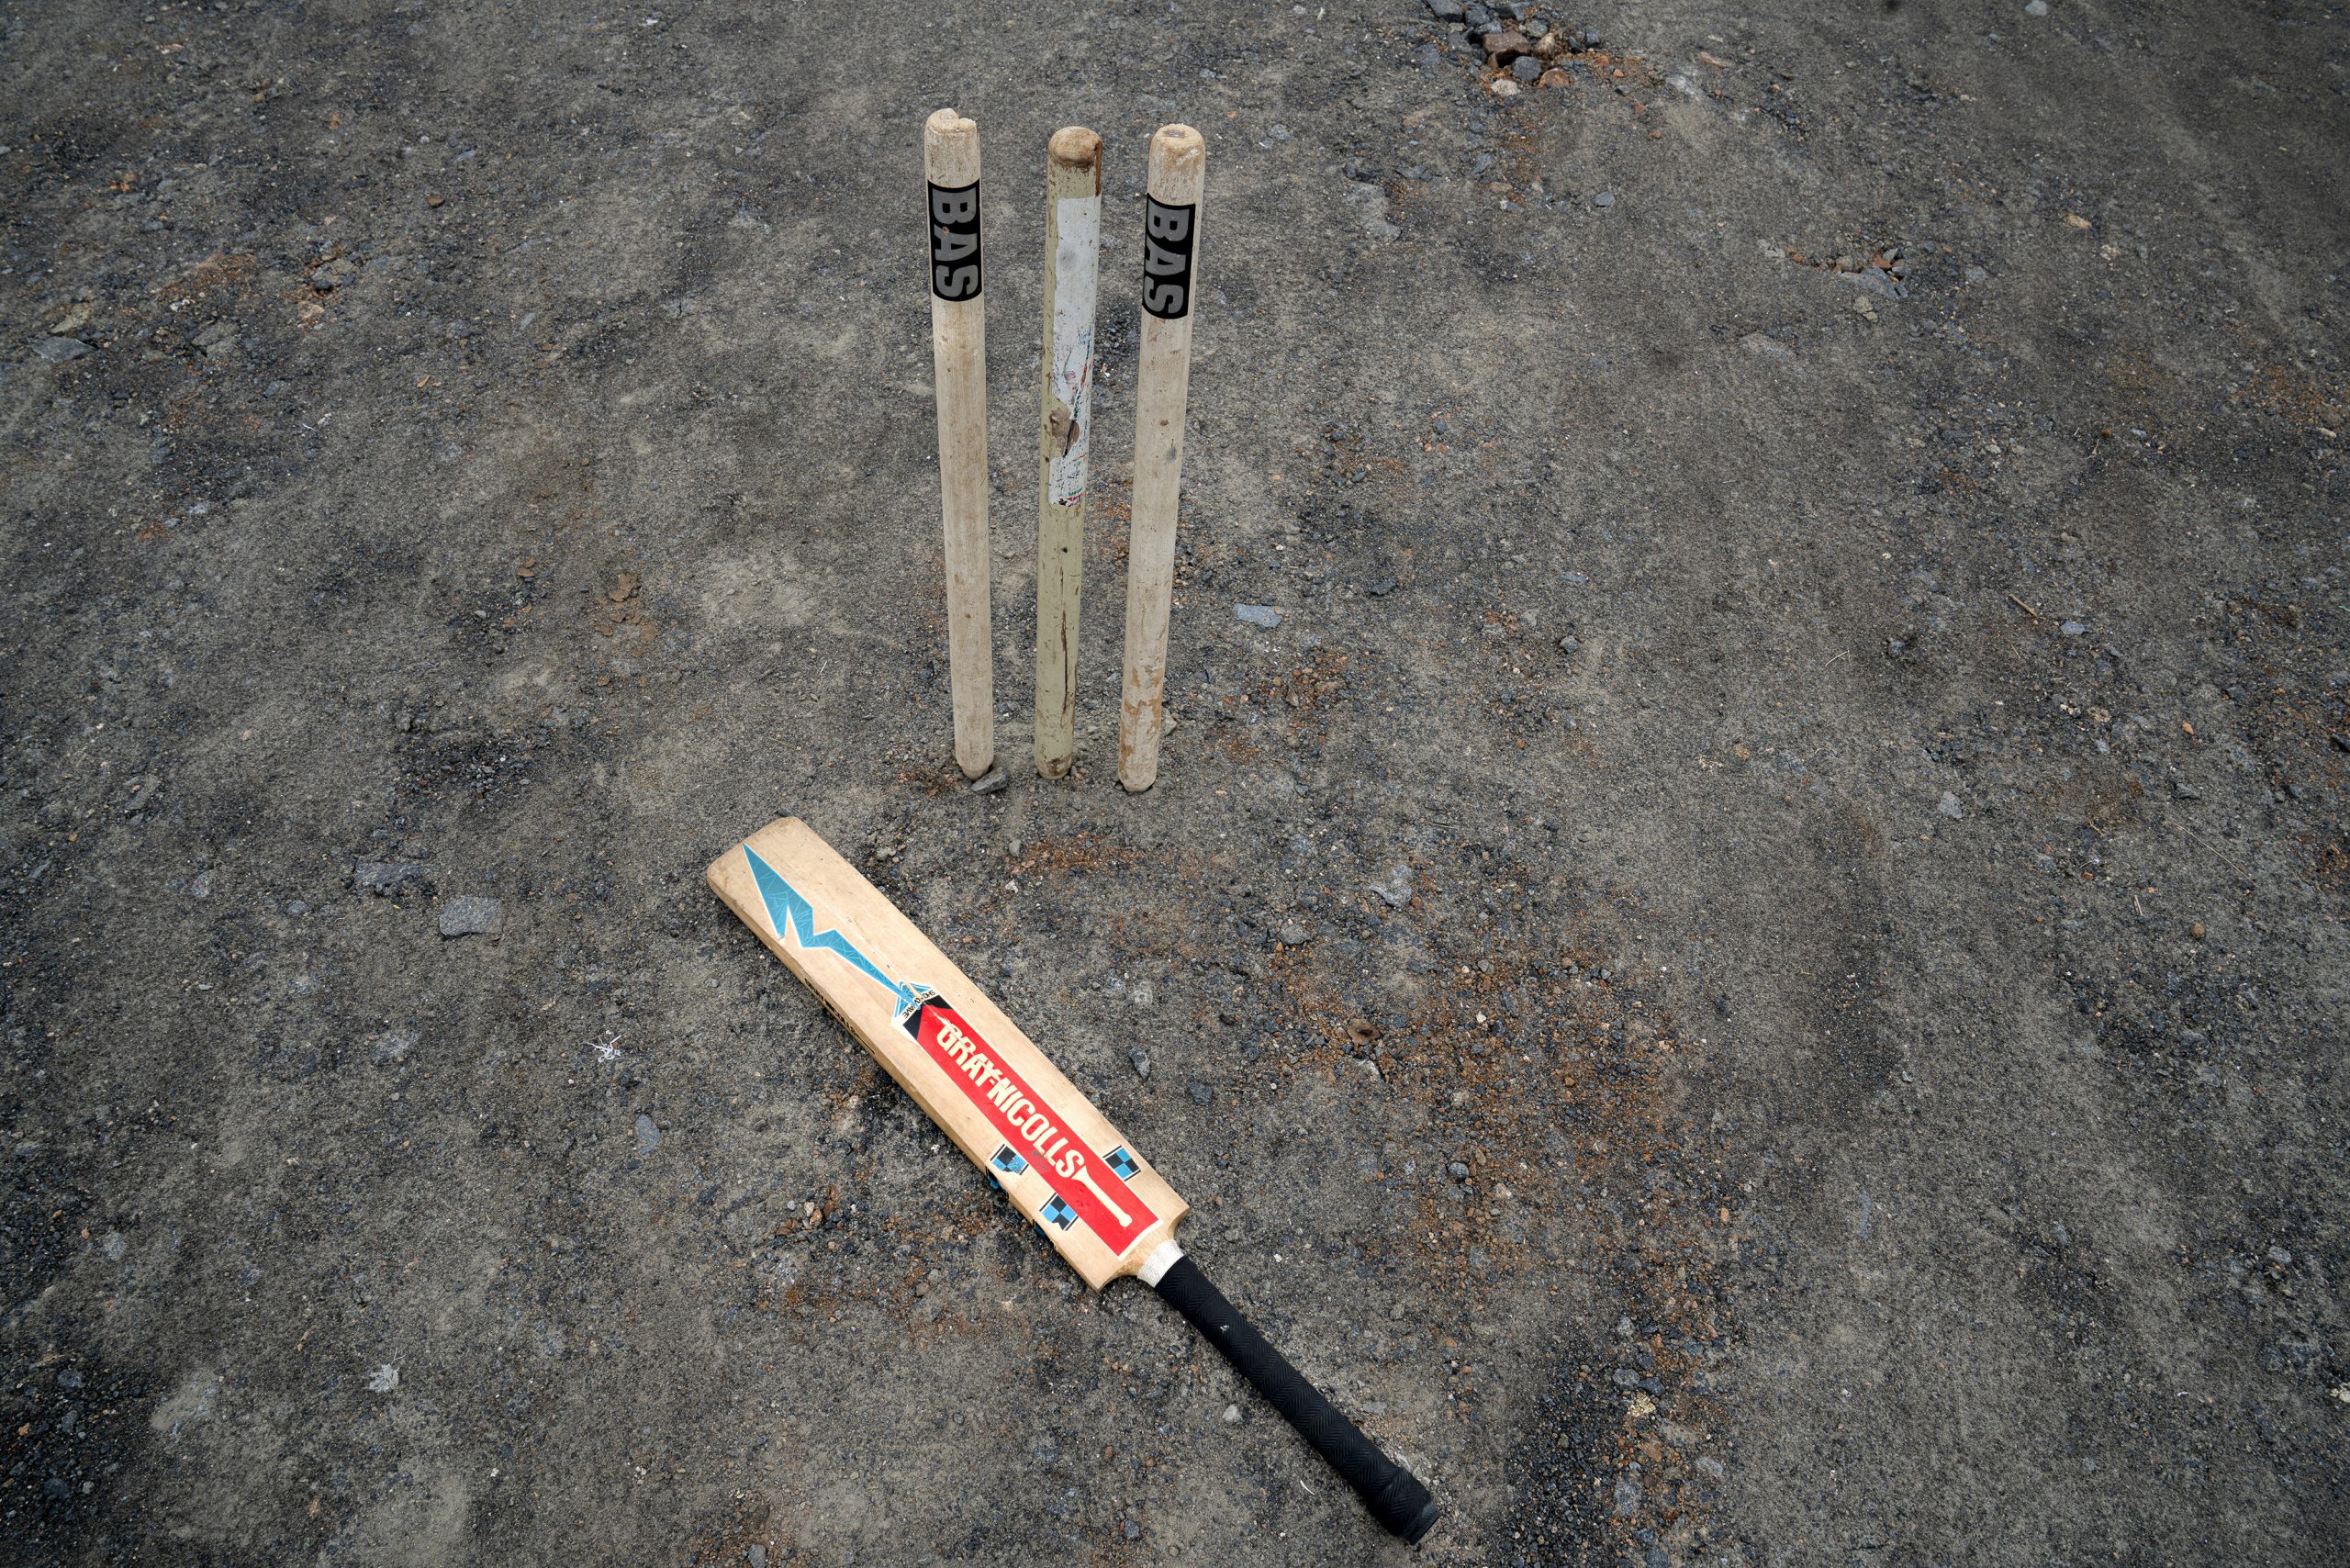 Cricket sports equipment